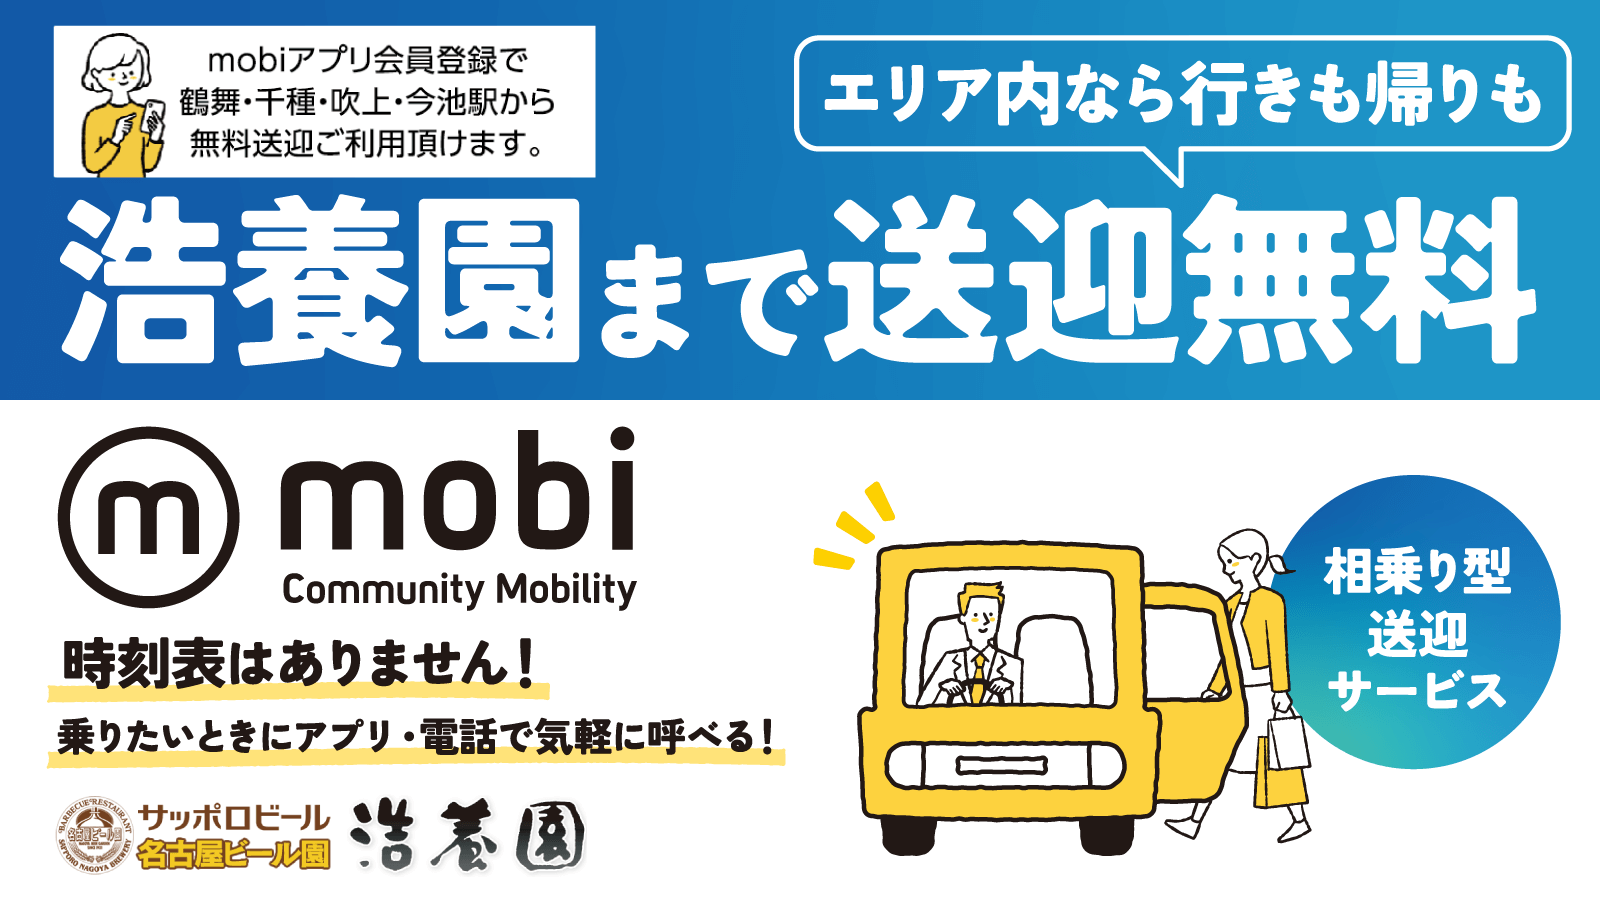 mobiアプリで浩養園まで送迎無料 時刻表はありません！乗りたいときにアプリ・電話で気軽に呼べる！　相乗り型送迎サービス